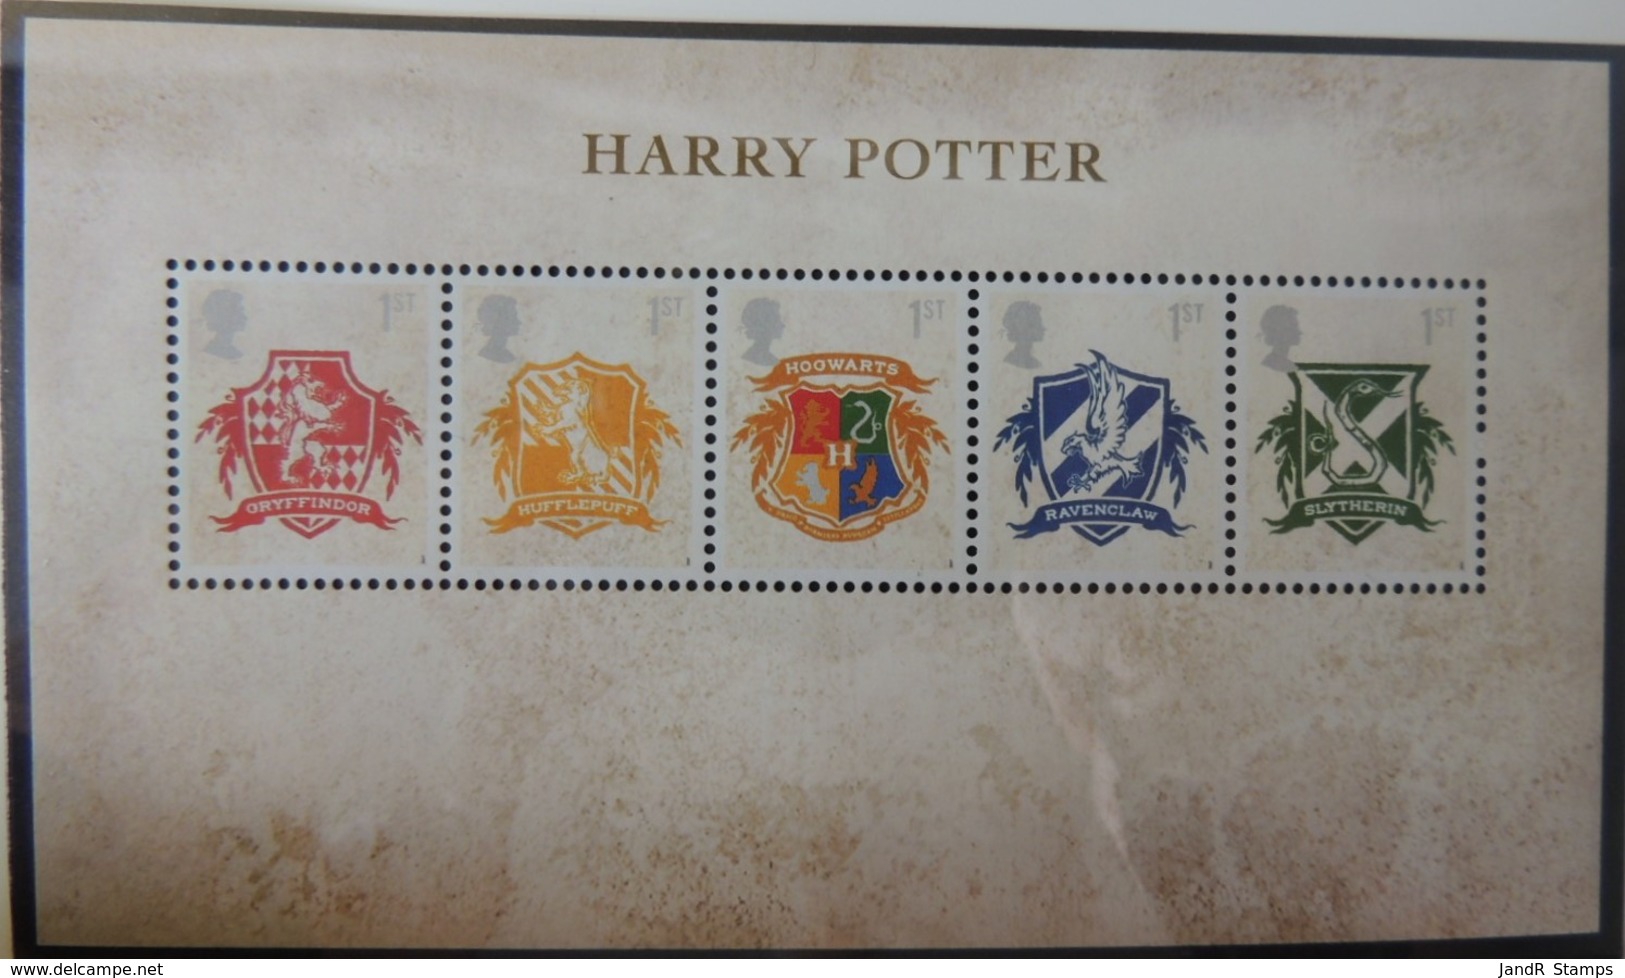 GREAT BRITAIN 2007 HARRY POTTER MINIATURE SHEET MS2757 UNMOUNTED MINT CRESTS CHILDREN CINEMA LITERATURE - Unused Stamps